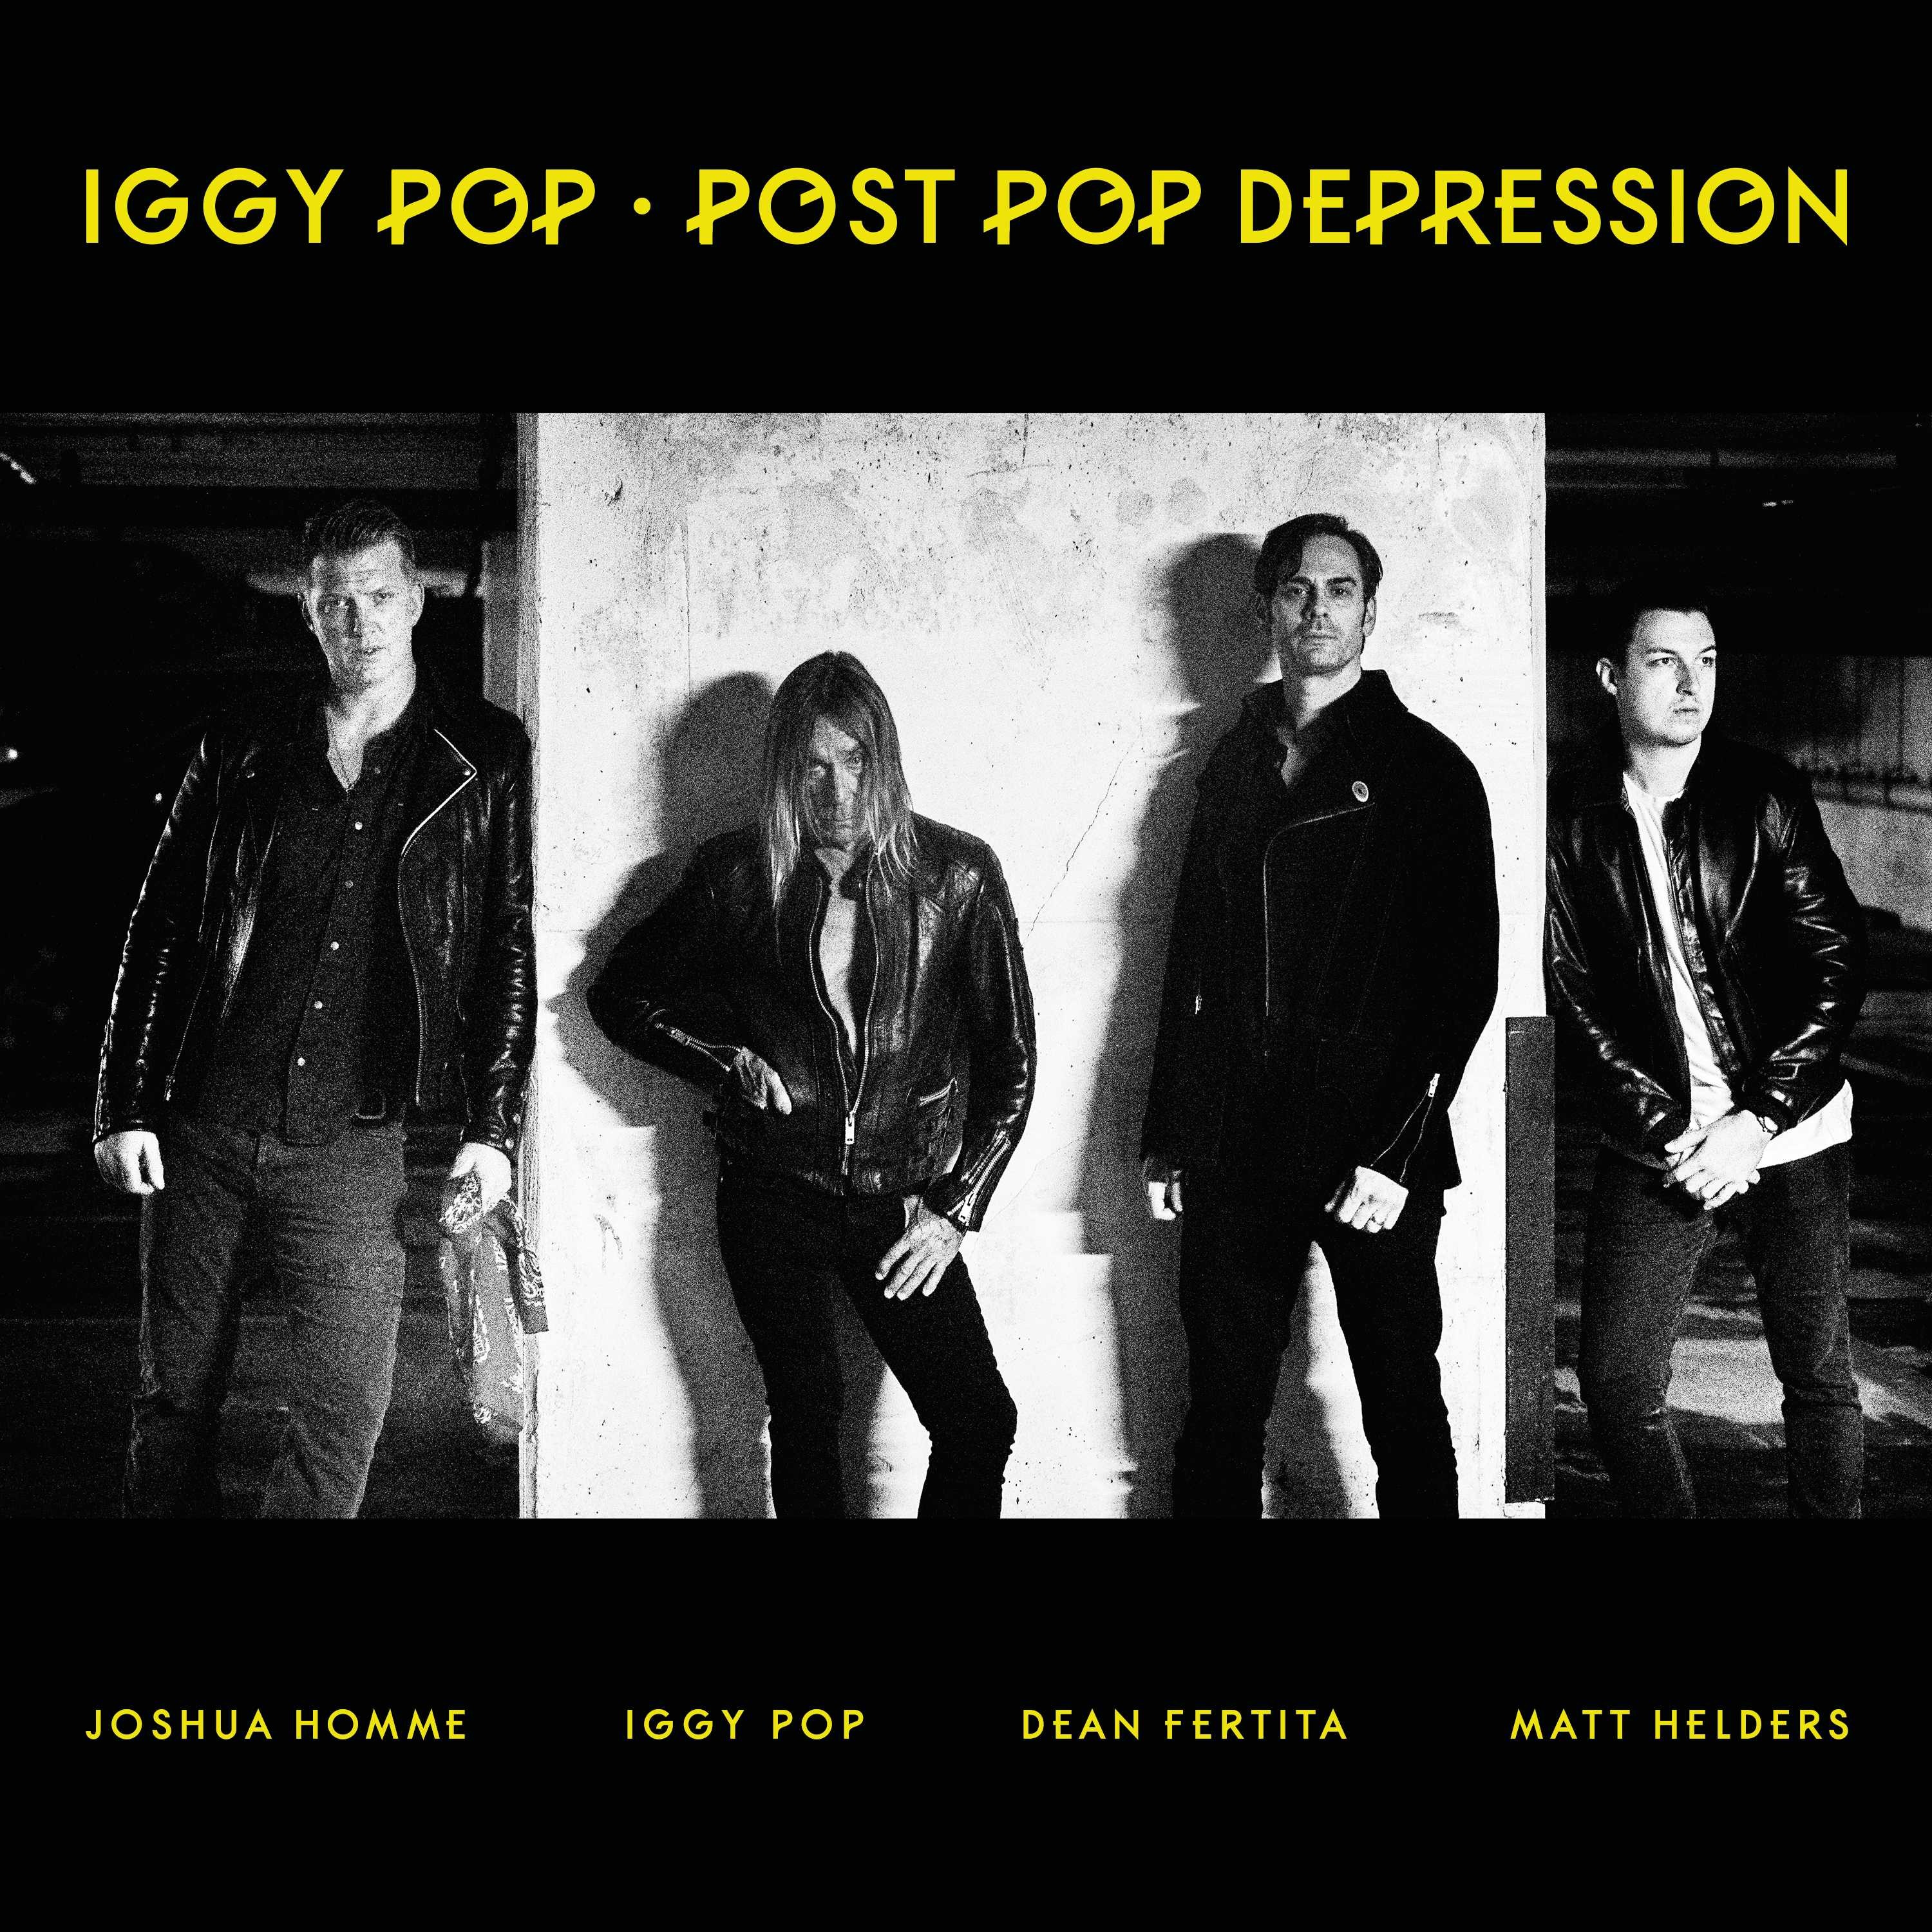 iggy pop post pop depression tour